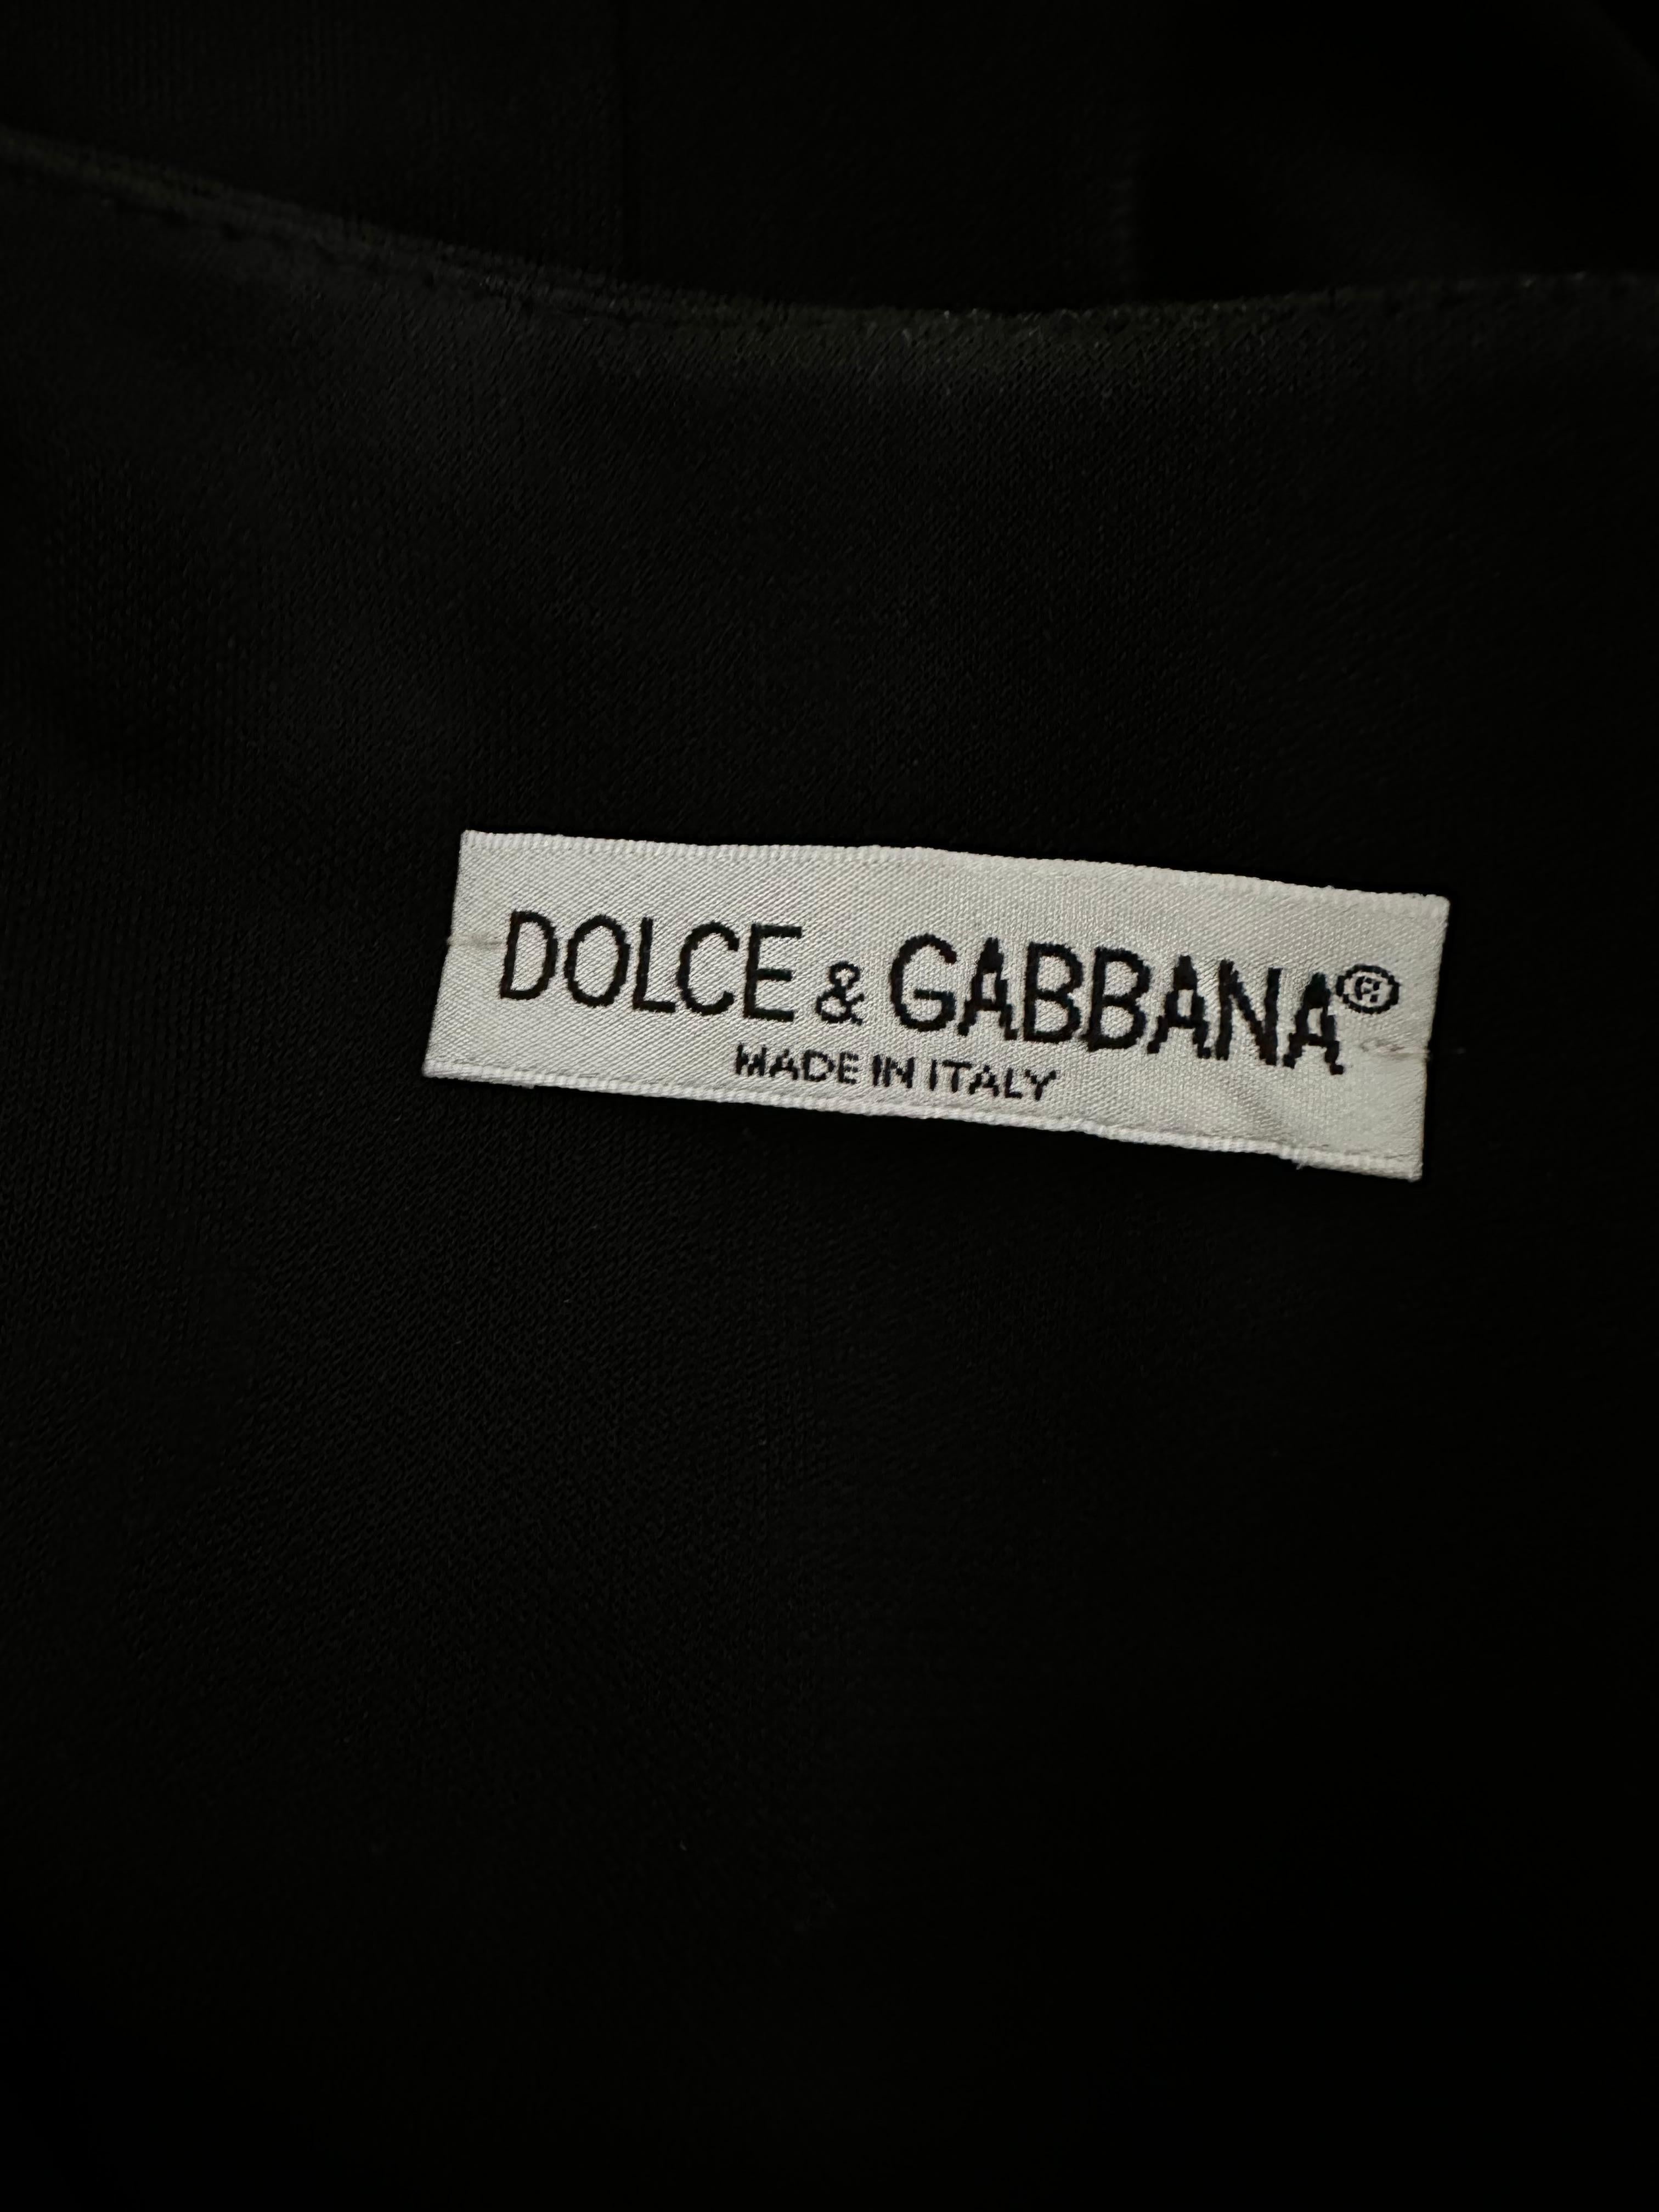 Dolce Gabbana 1996 runway mini slit dress For Sale 2